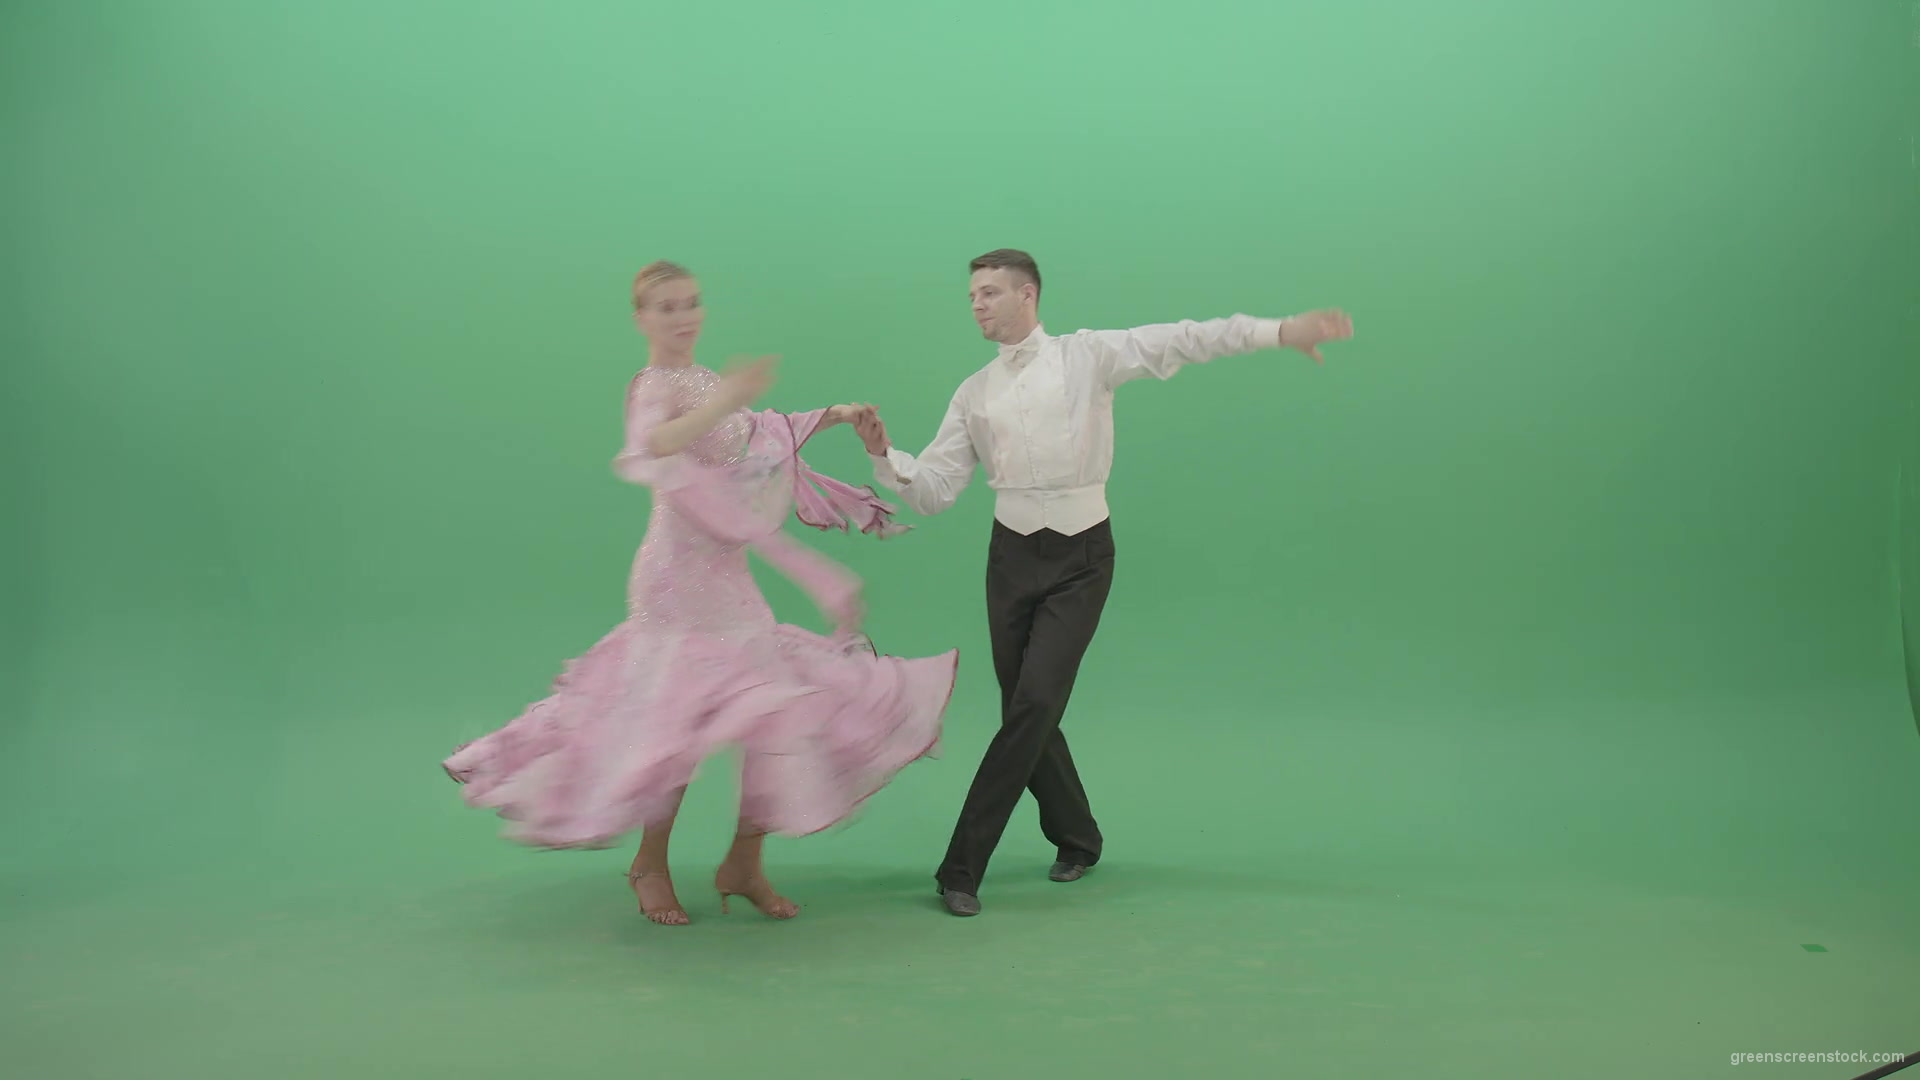 Luxury-ballroom-dance-partners-spinning-on-green-screen-making-open-element-4K-Video-Footage-1920_004 Green Screen Stock